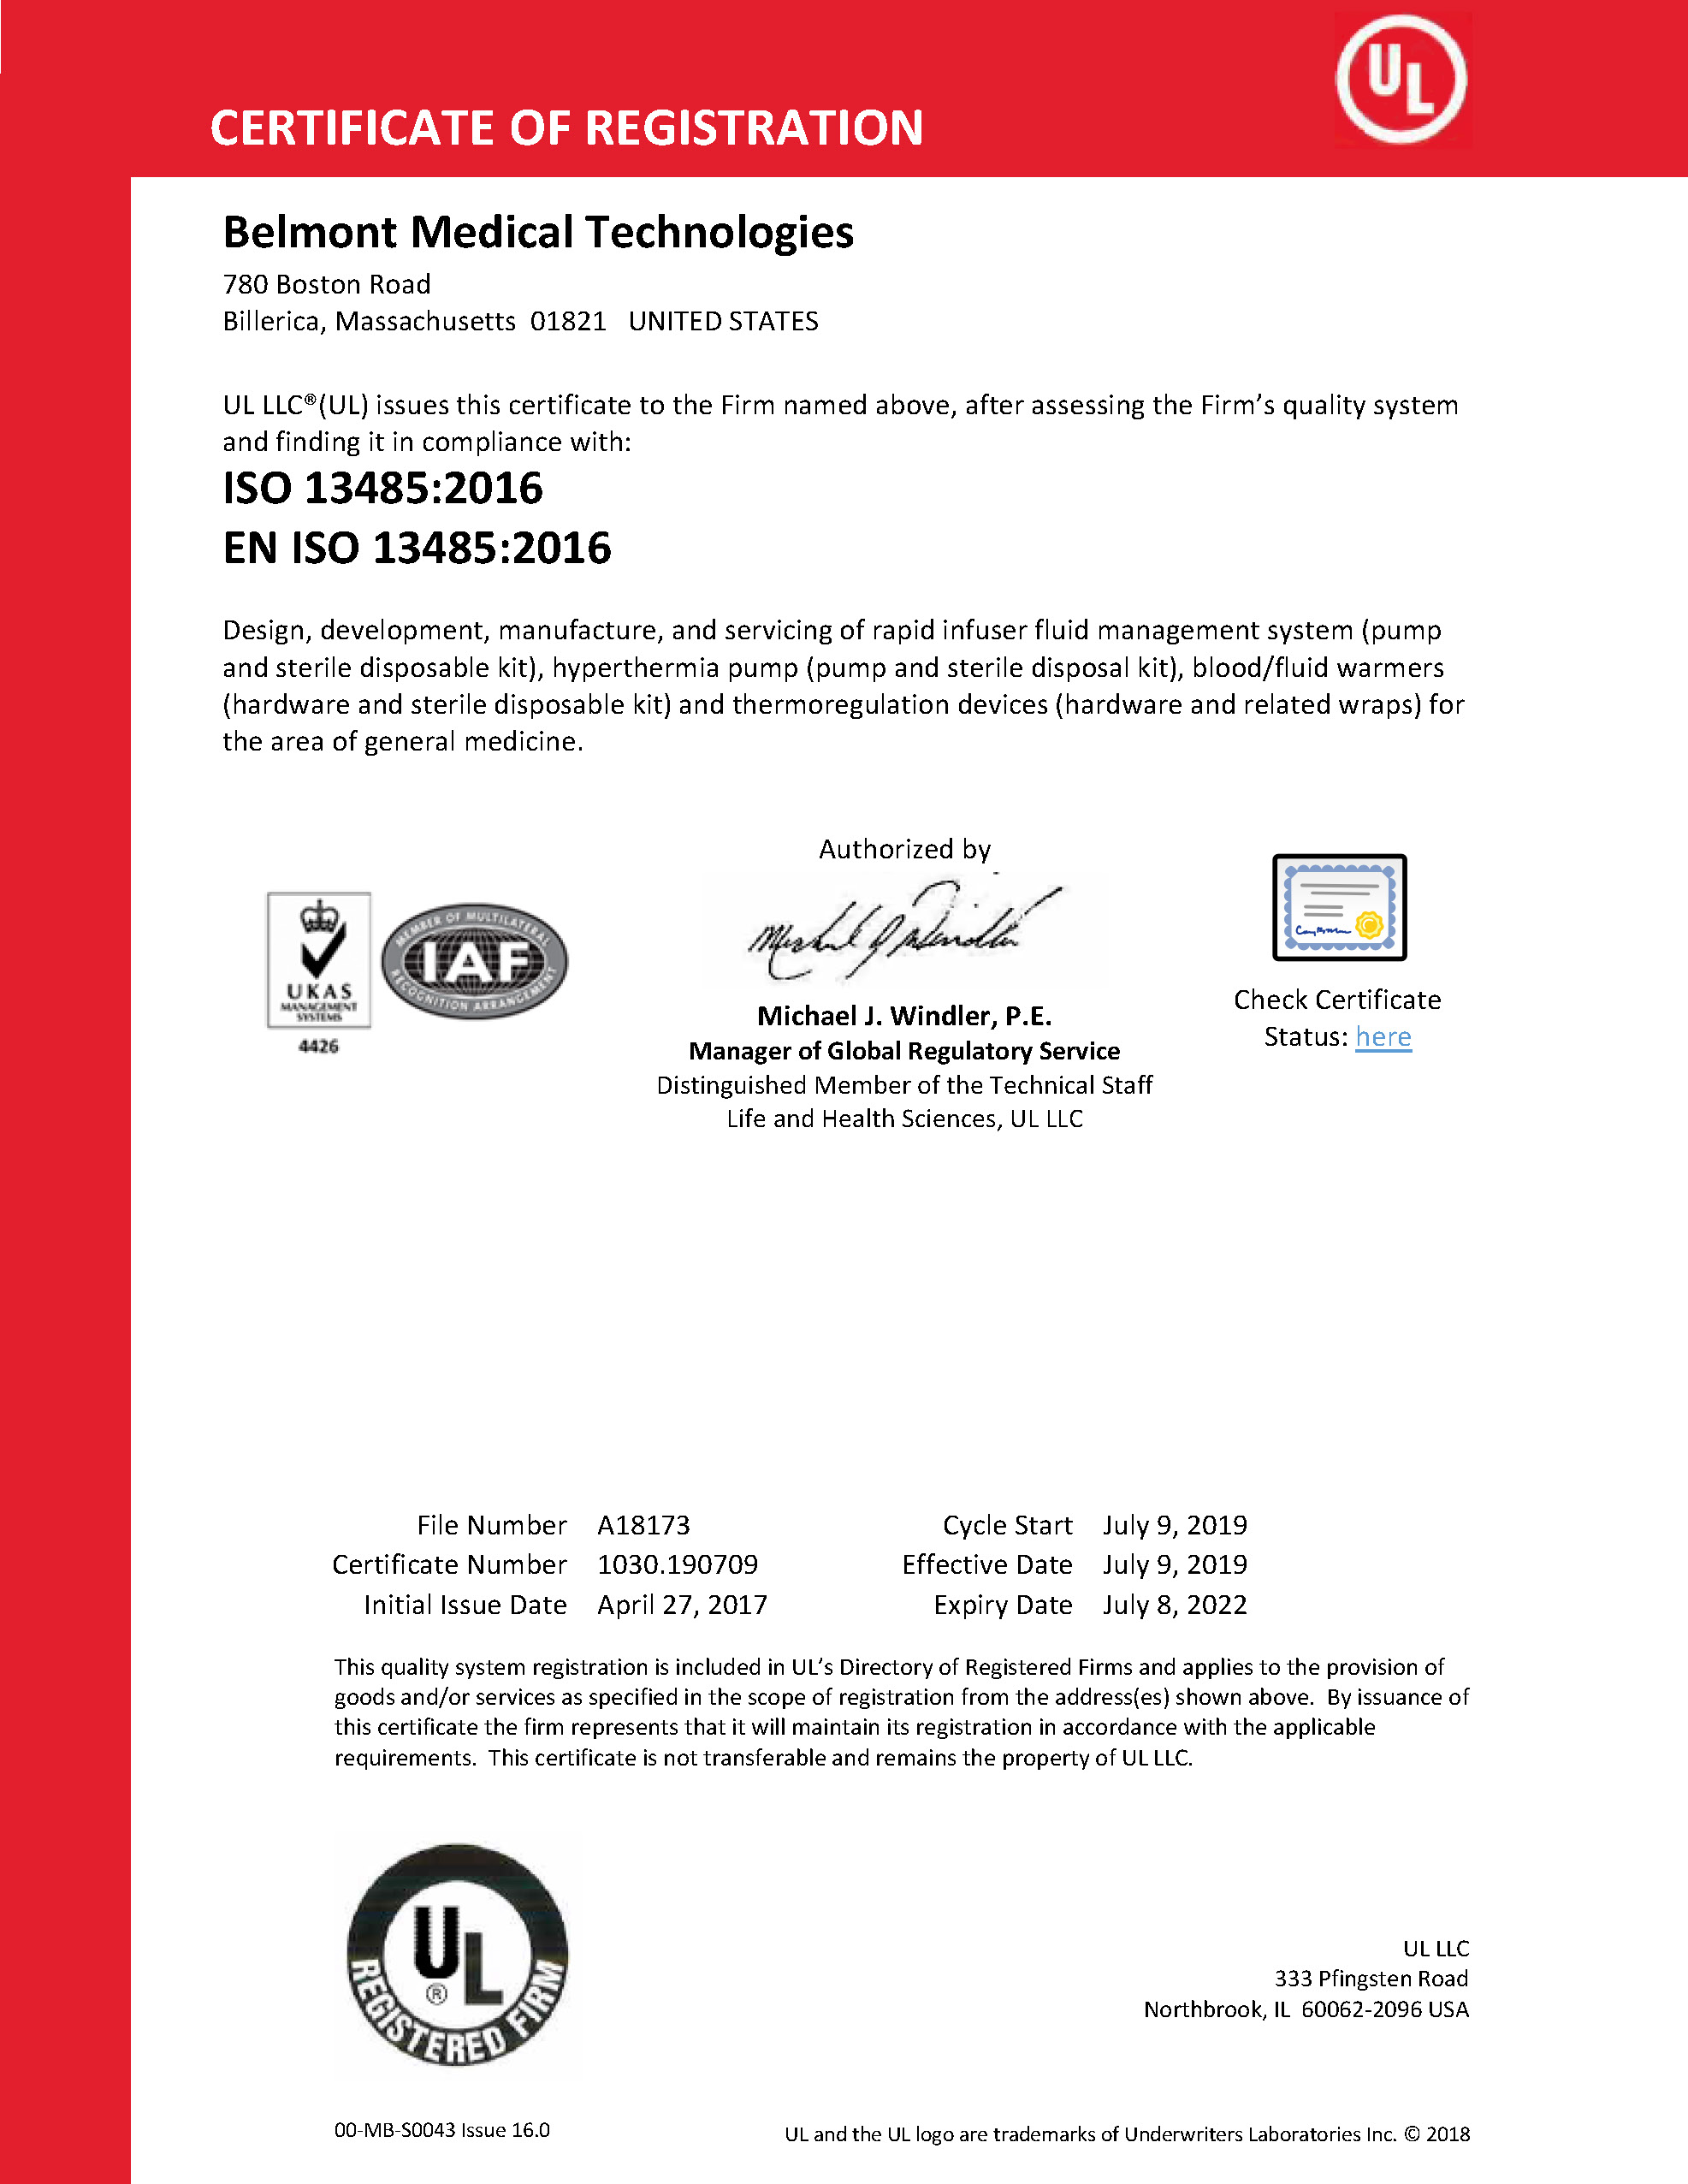 Belmont Medical Technologies ISO 13485-16 Certificate | Belmont Medical